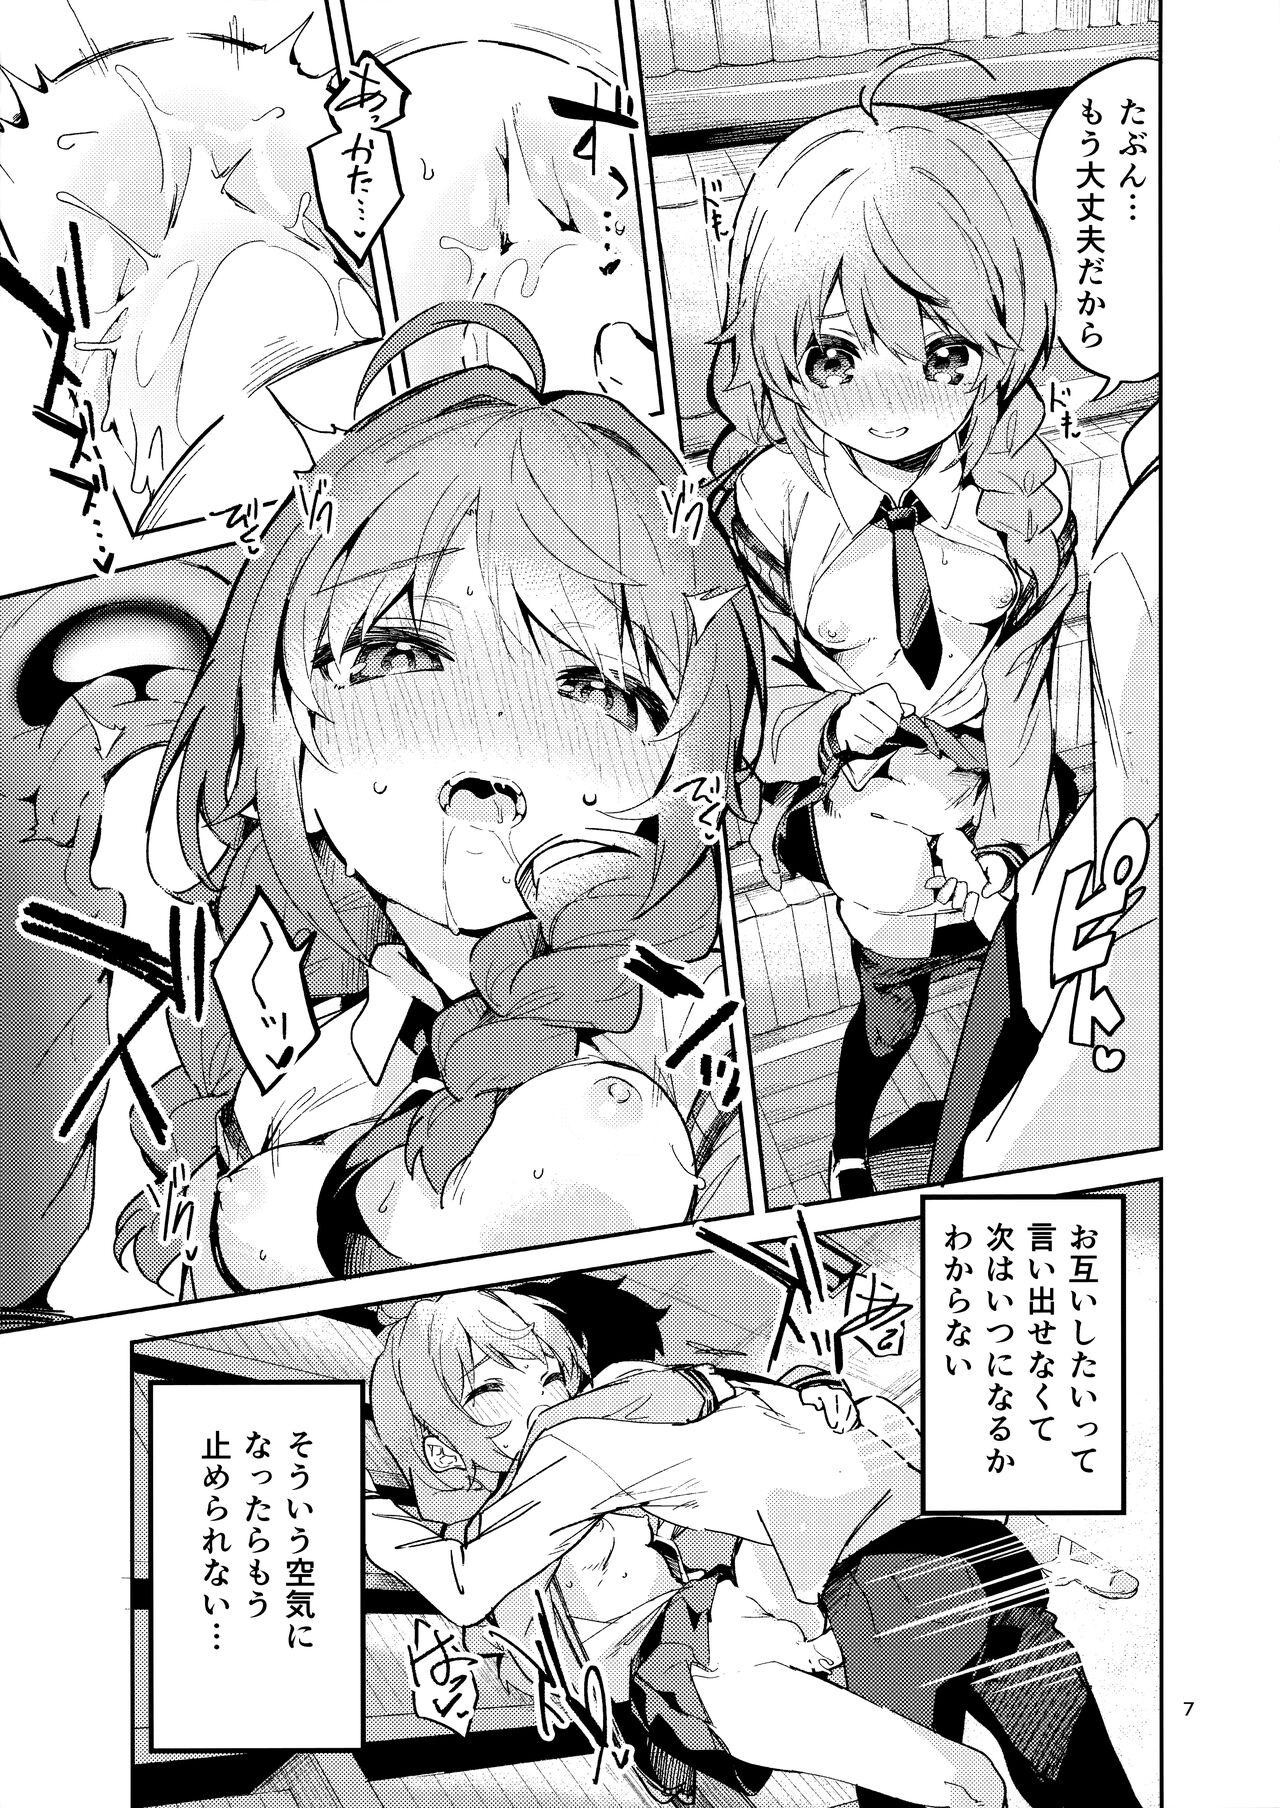 Club Seishun no Teigi - Princess connect Weird - Page 6